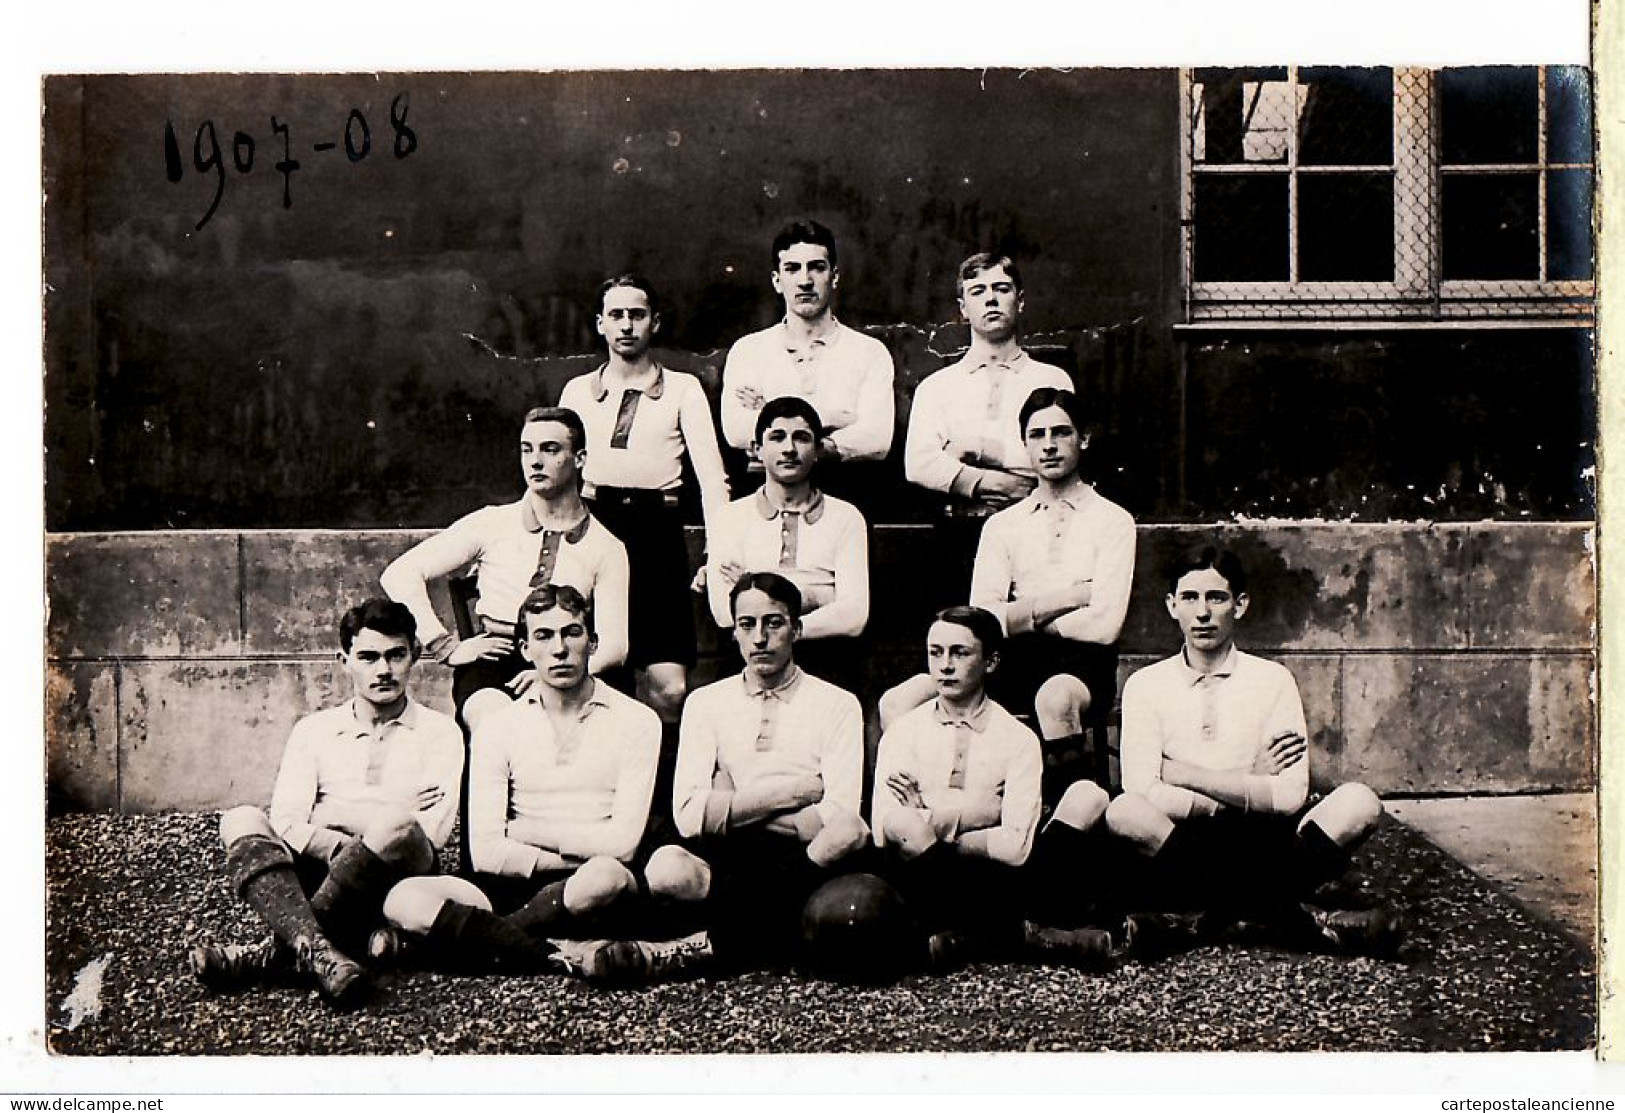 10828 / ROUEN (76) Institution JOIN LAMBERT Equipe FOOTBALL Saison 1907-1908 CARTE PHOTO CPASPORT Peu Commun - Rouen